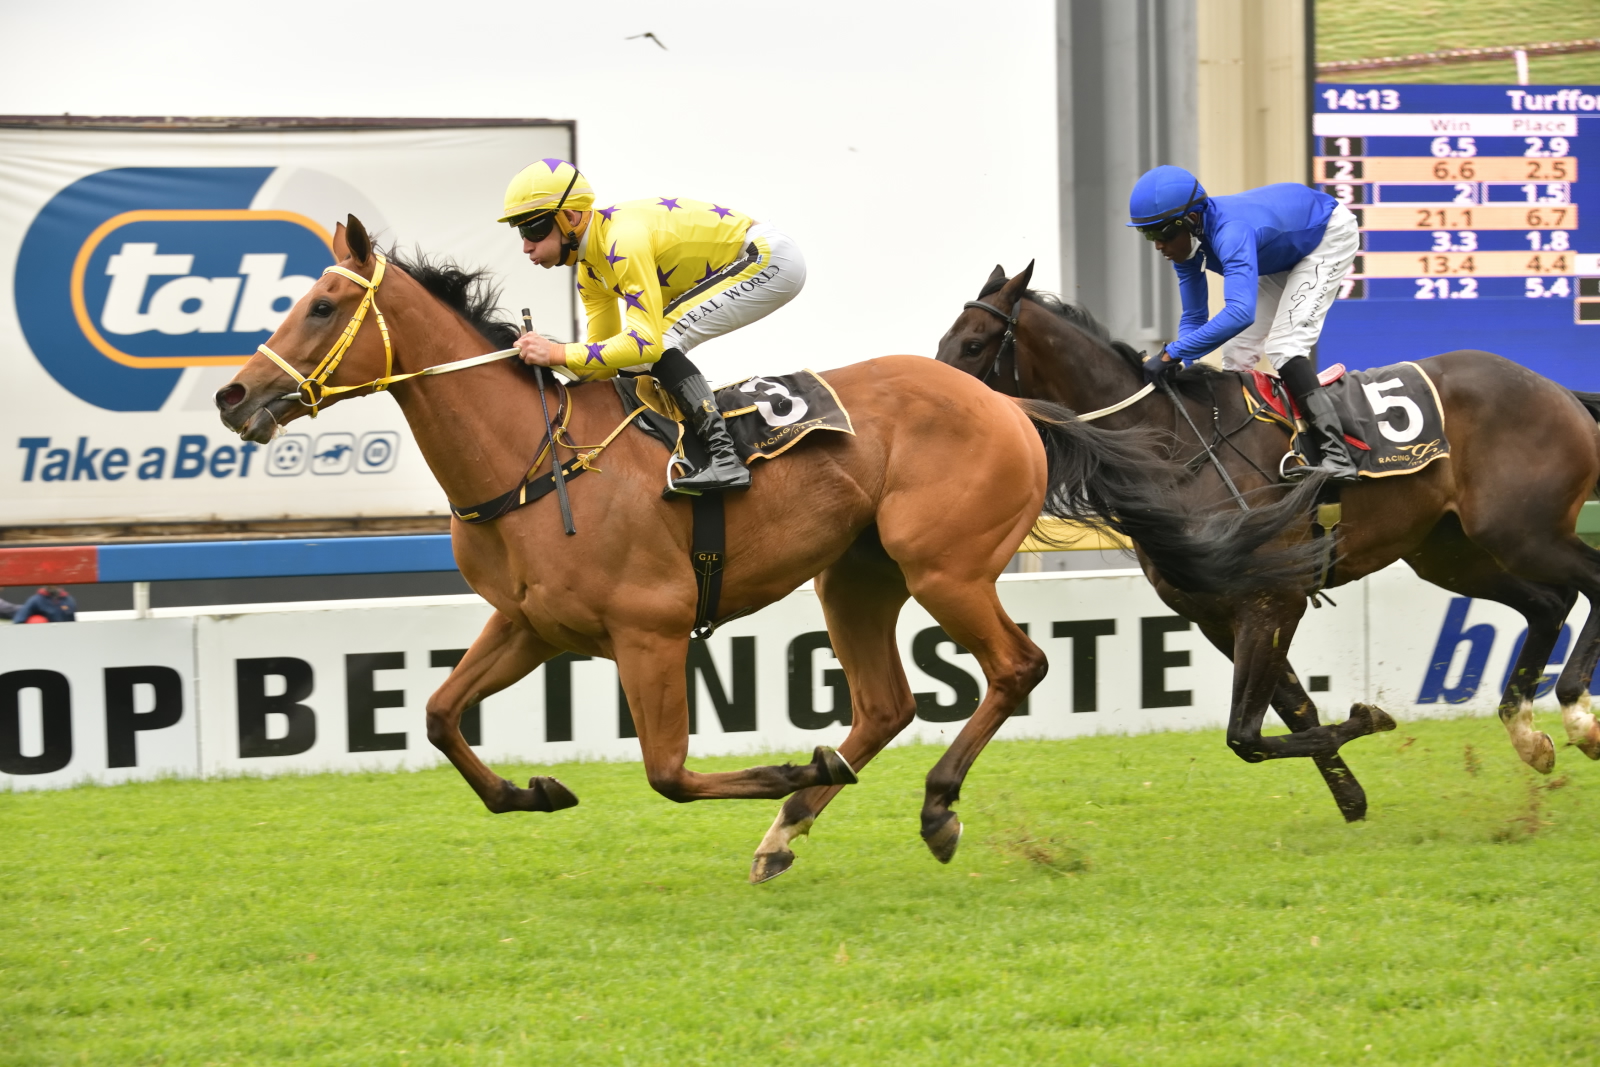 Horse winning at Turffontein with yellow silks